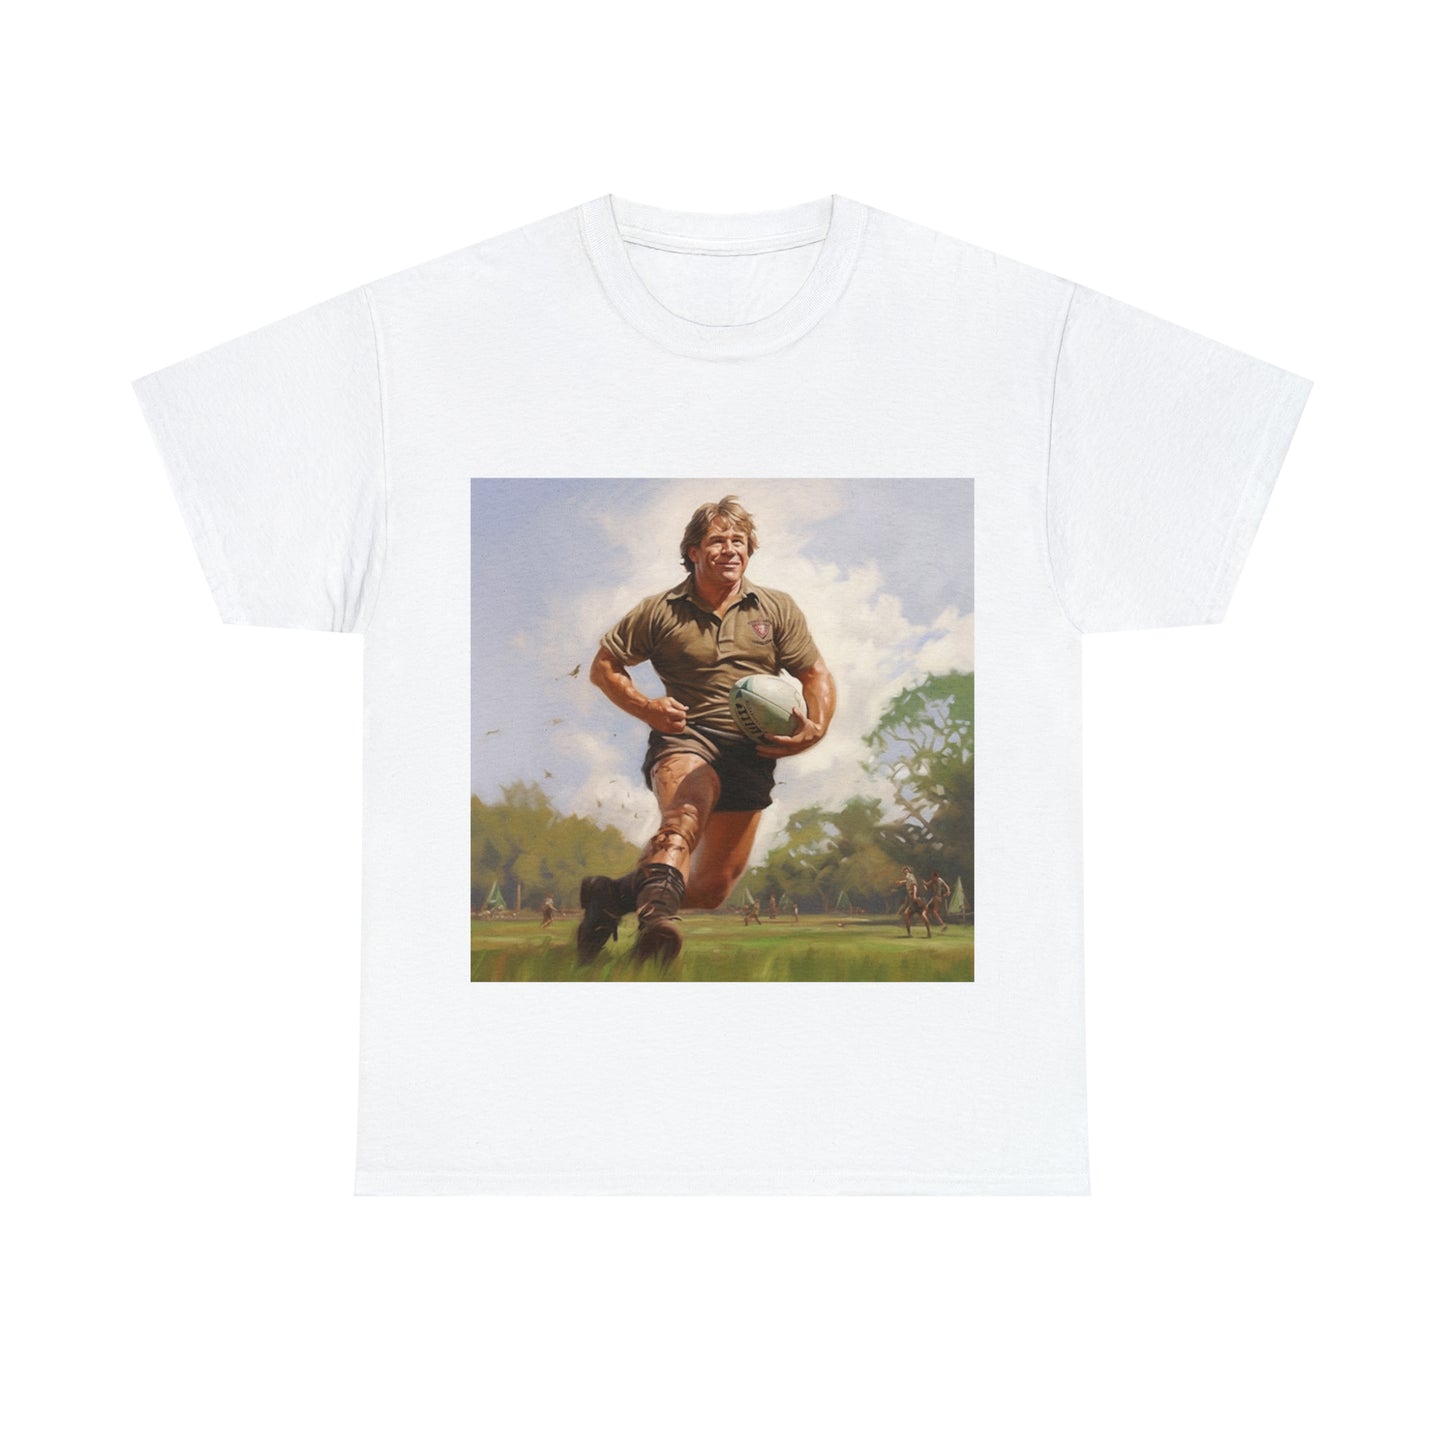 Steve Irwin 2 - light shirts